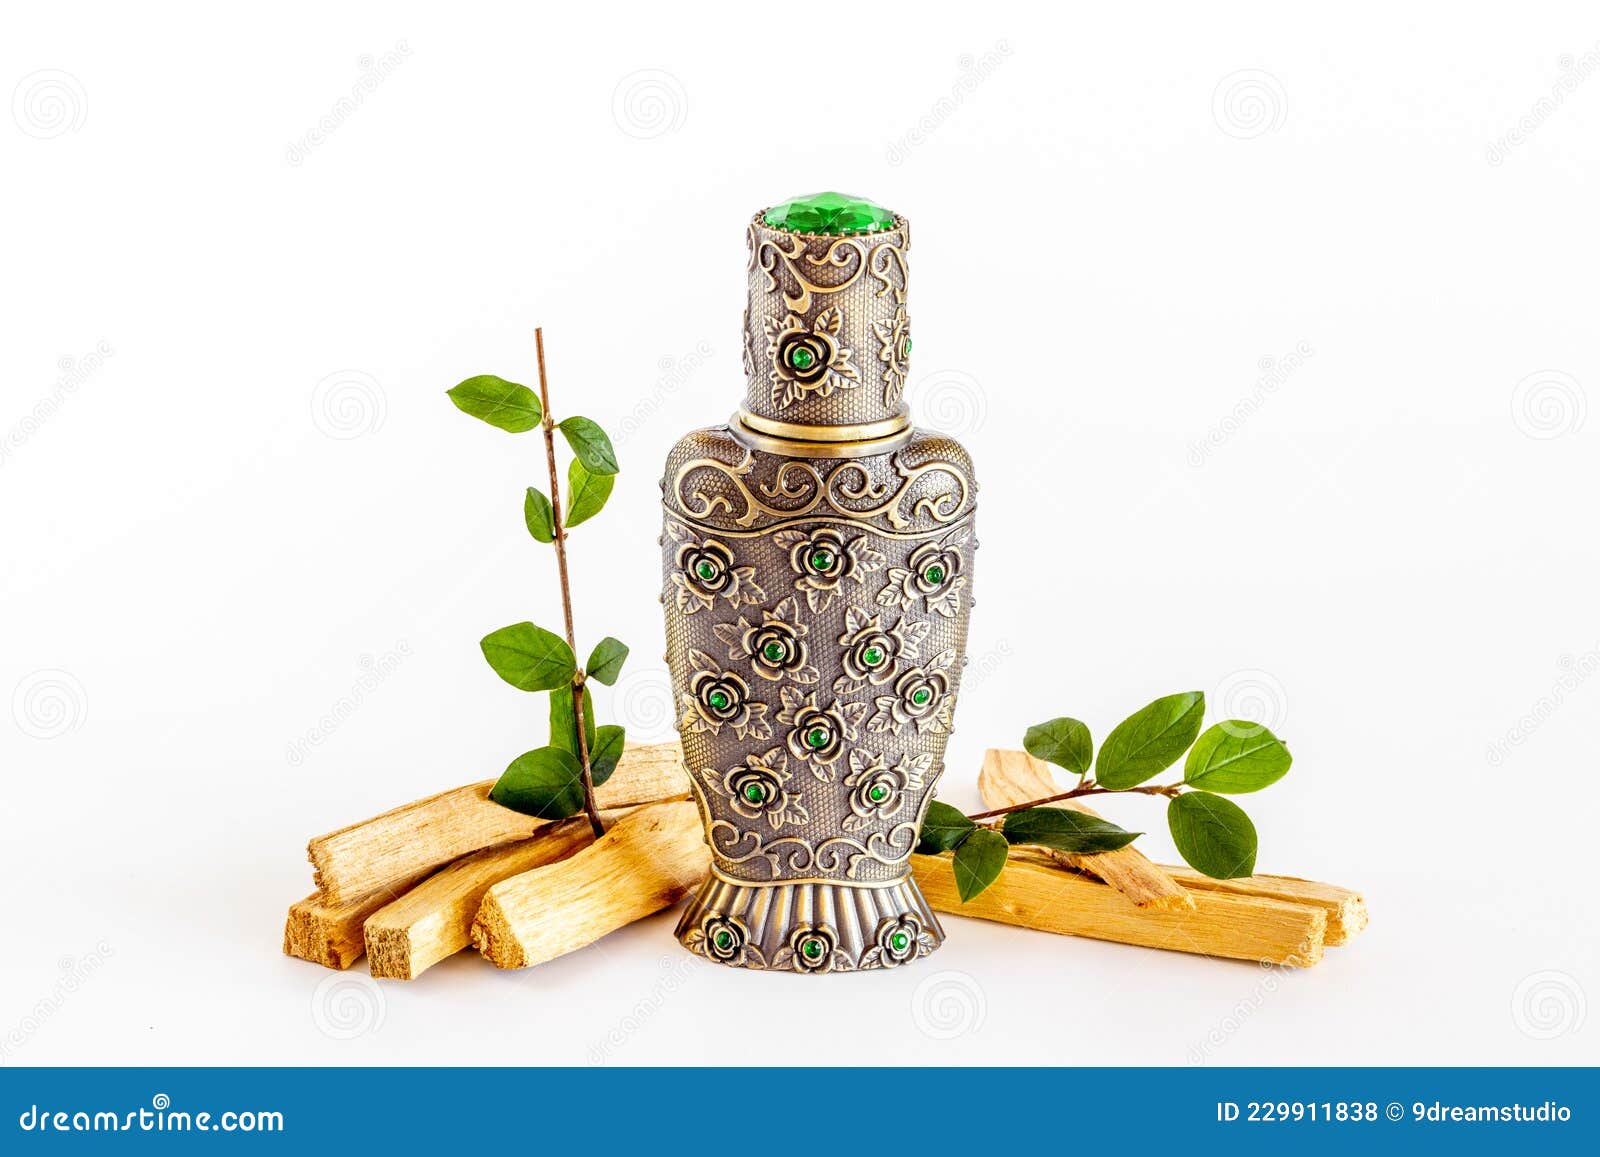 arabian oud perfume or oil with agar wood tree.